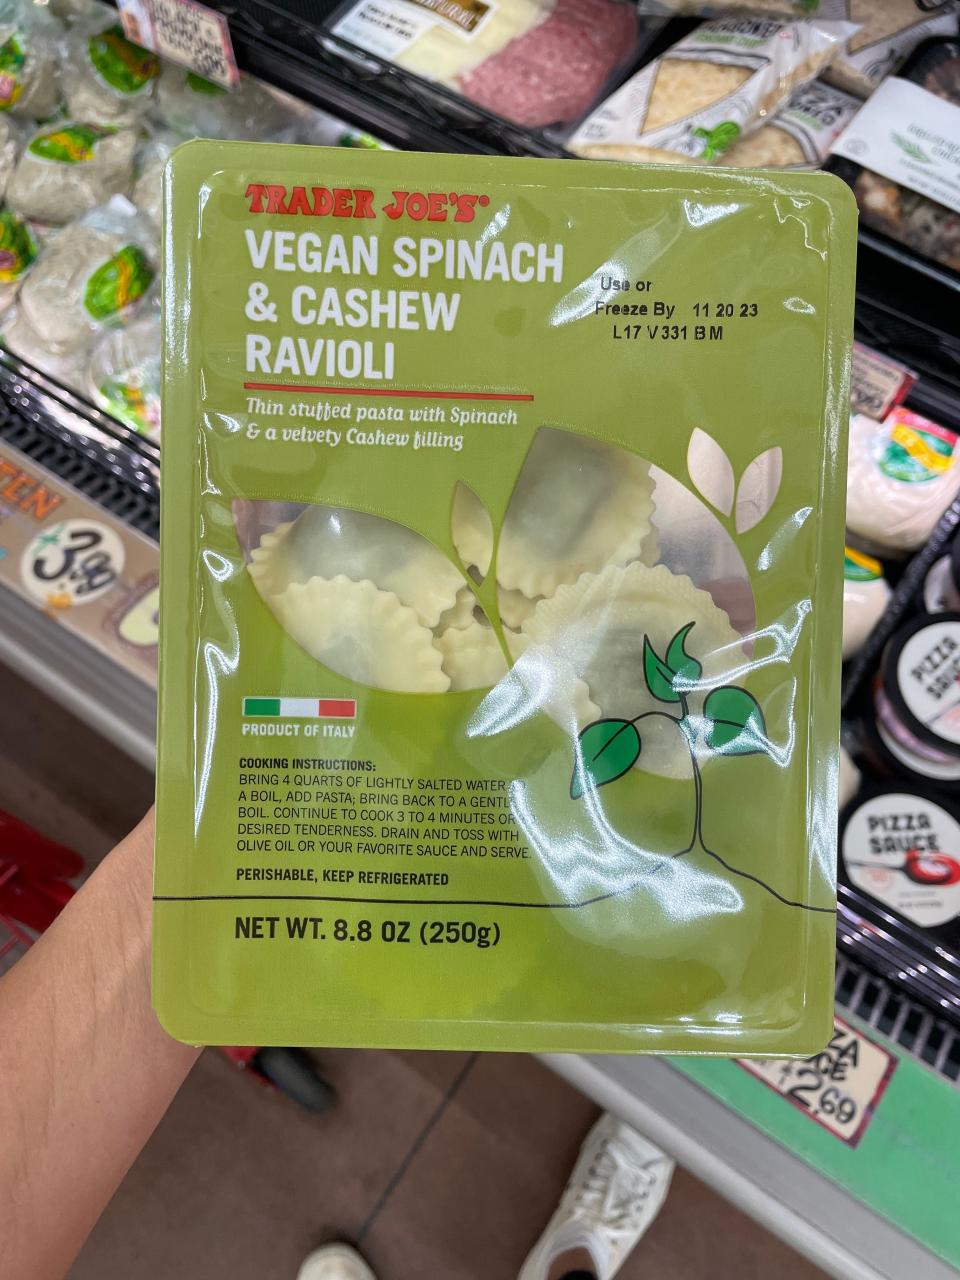 Vegan ravioli from Trader Joe's.